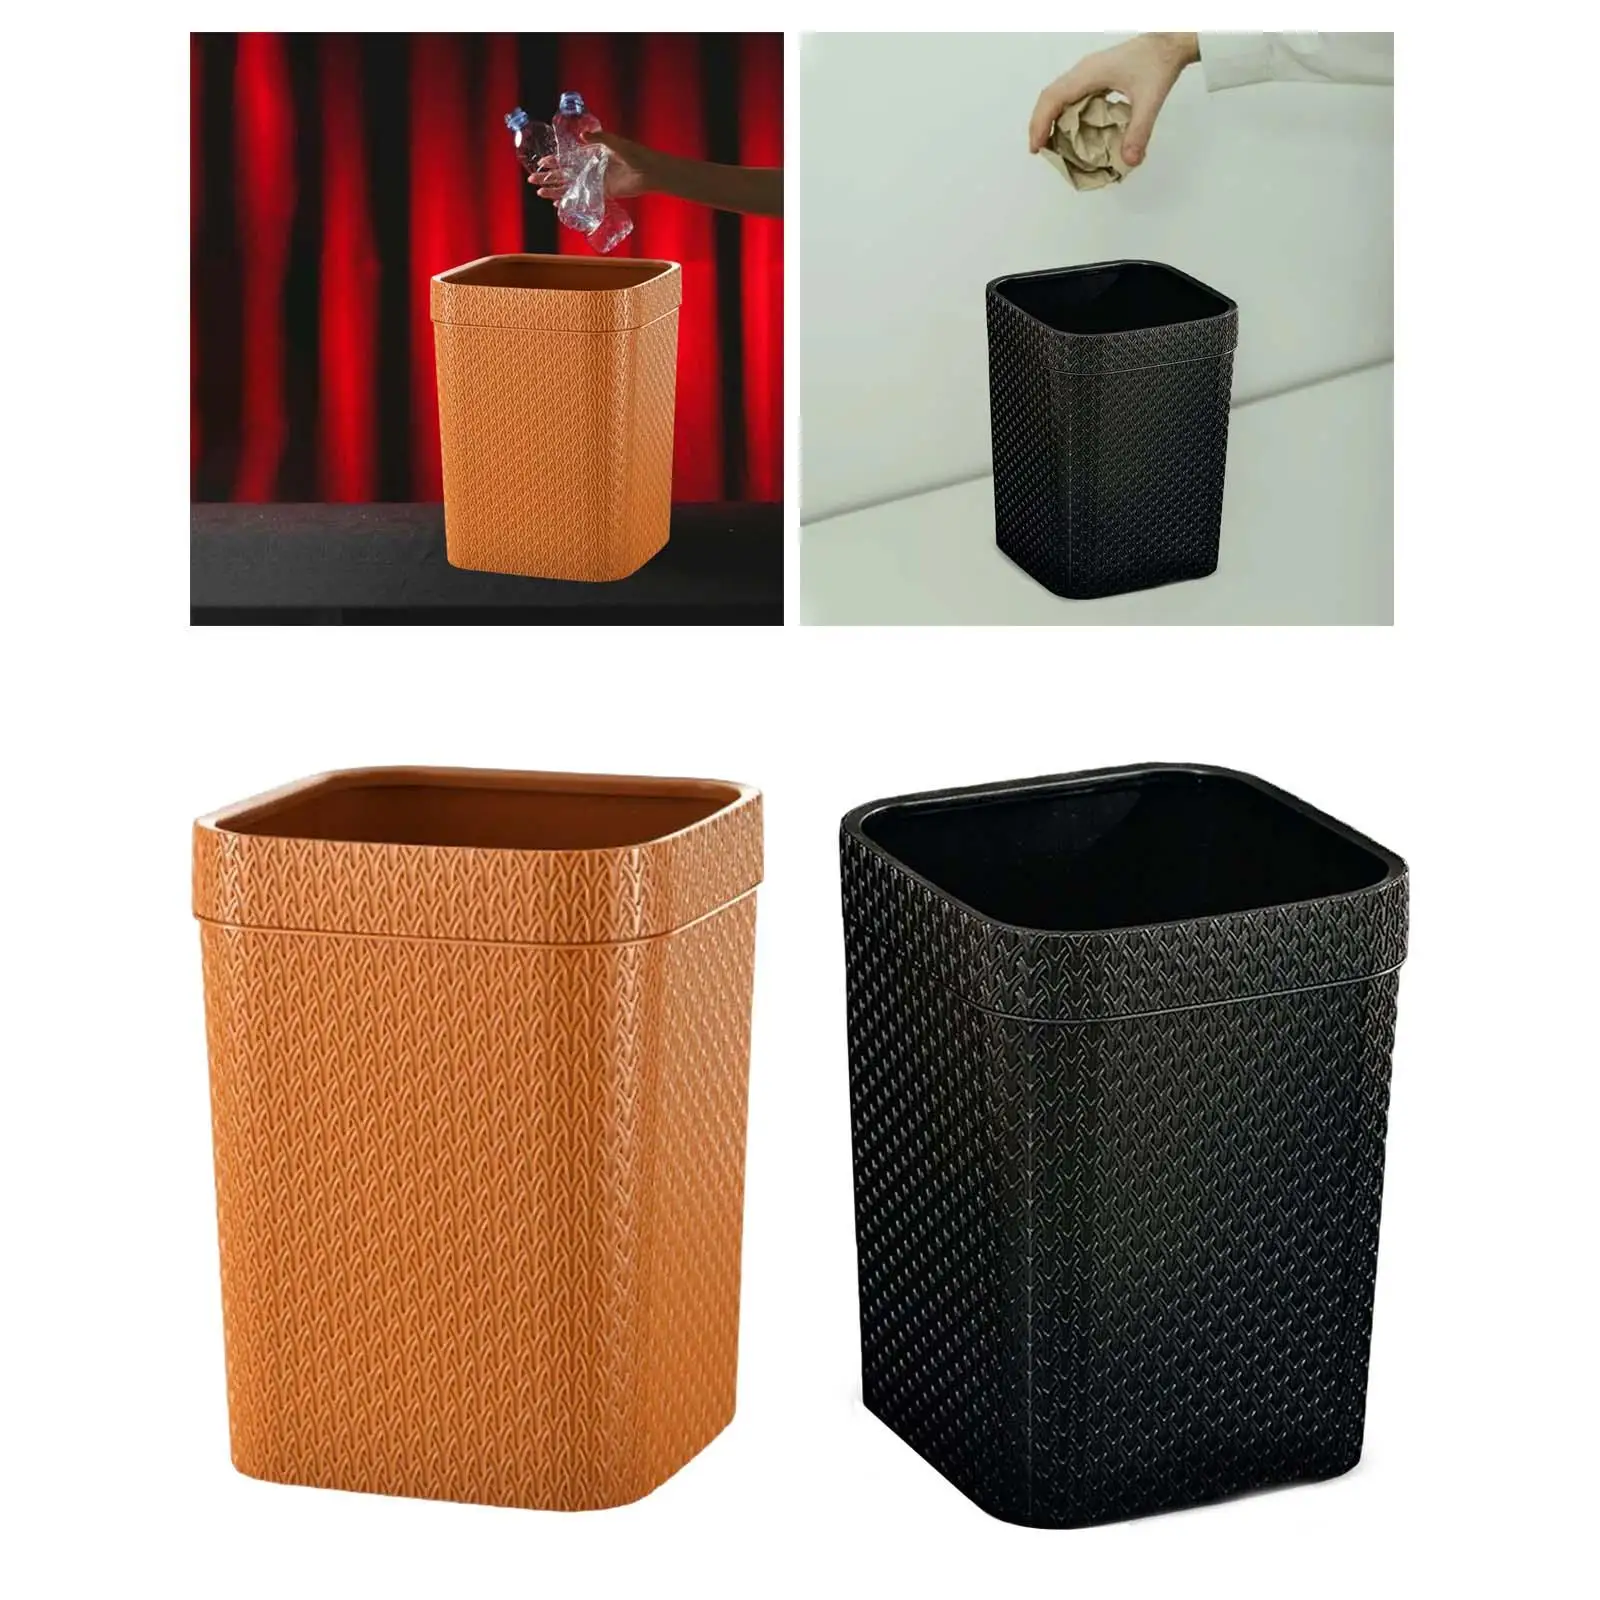 Garbage Bin Plastic Square Narrow Rattan Style Wastebasket Dustbin Waste Bin for Hotel Office Cars Patio Outdoor Indoor